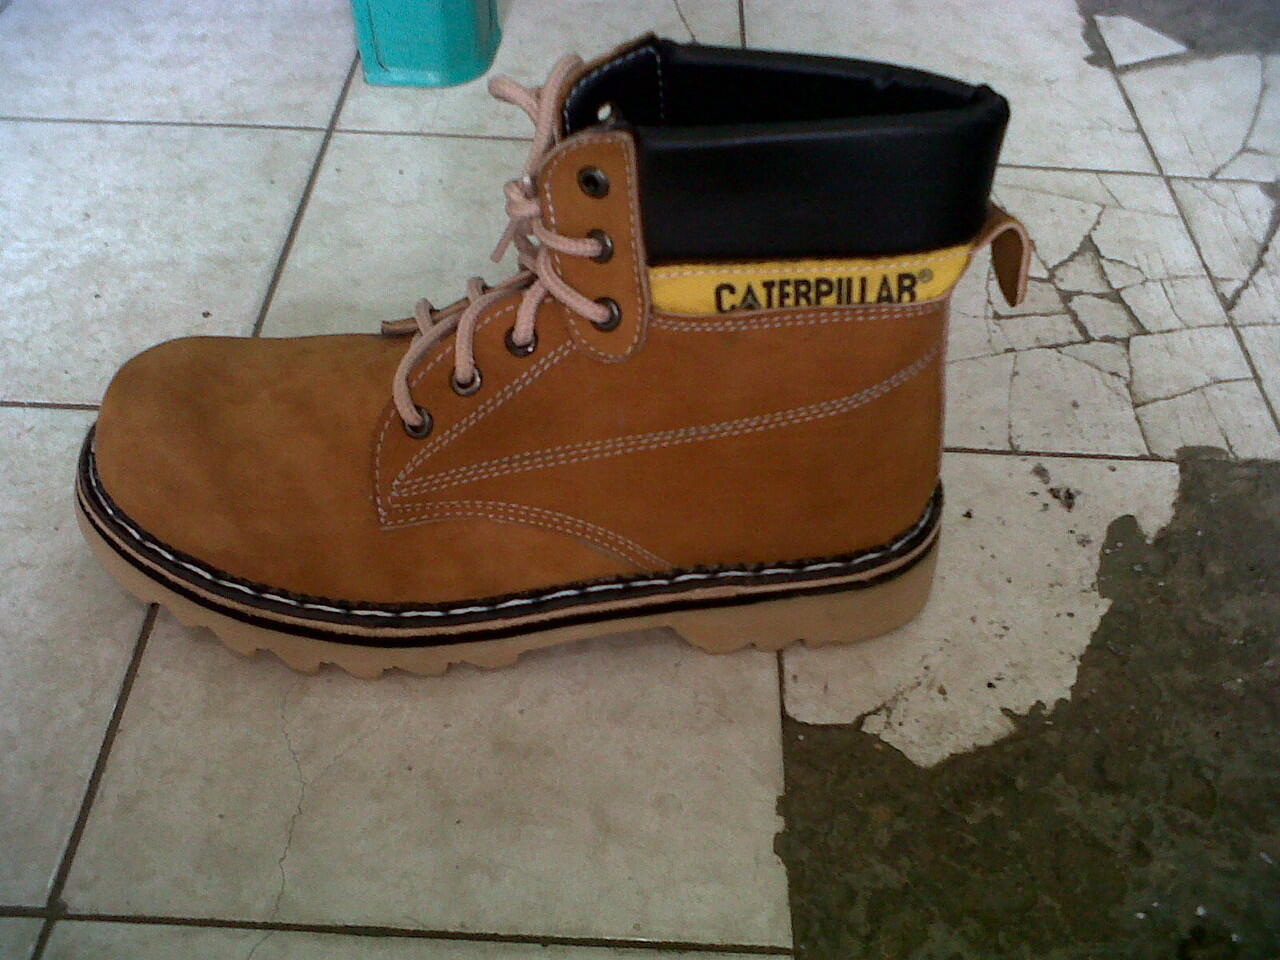 Sepatu Caterpillar/Caterboot muraahhhh